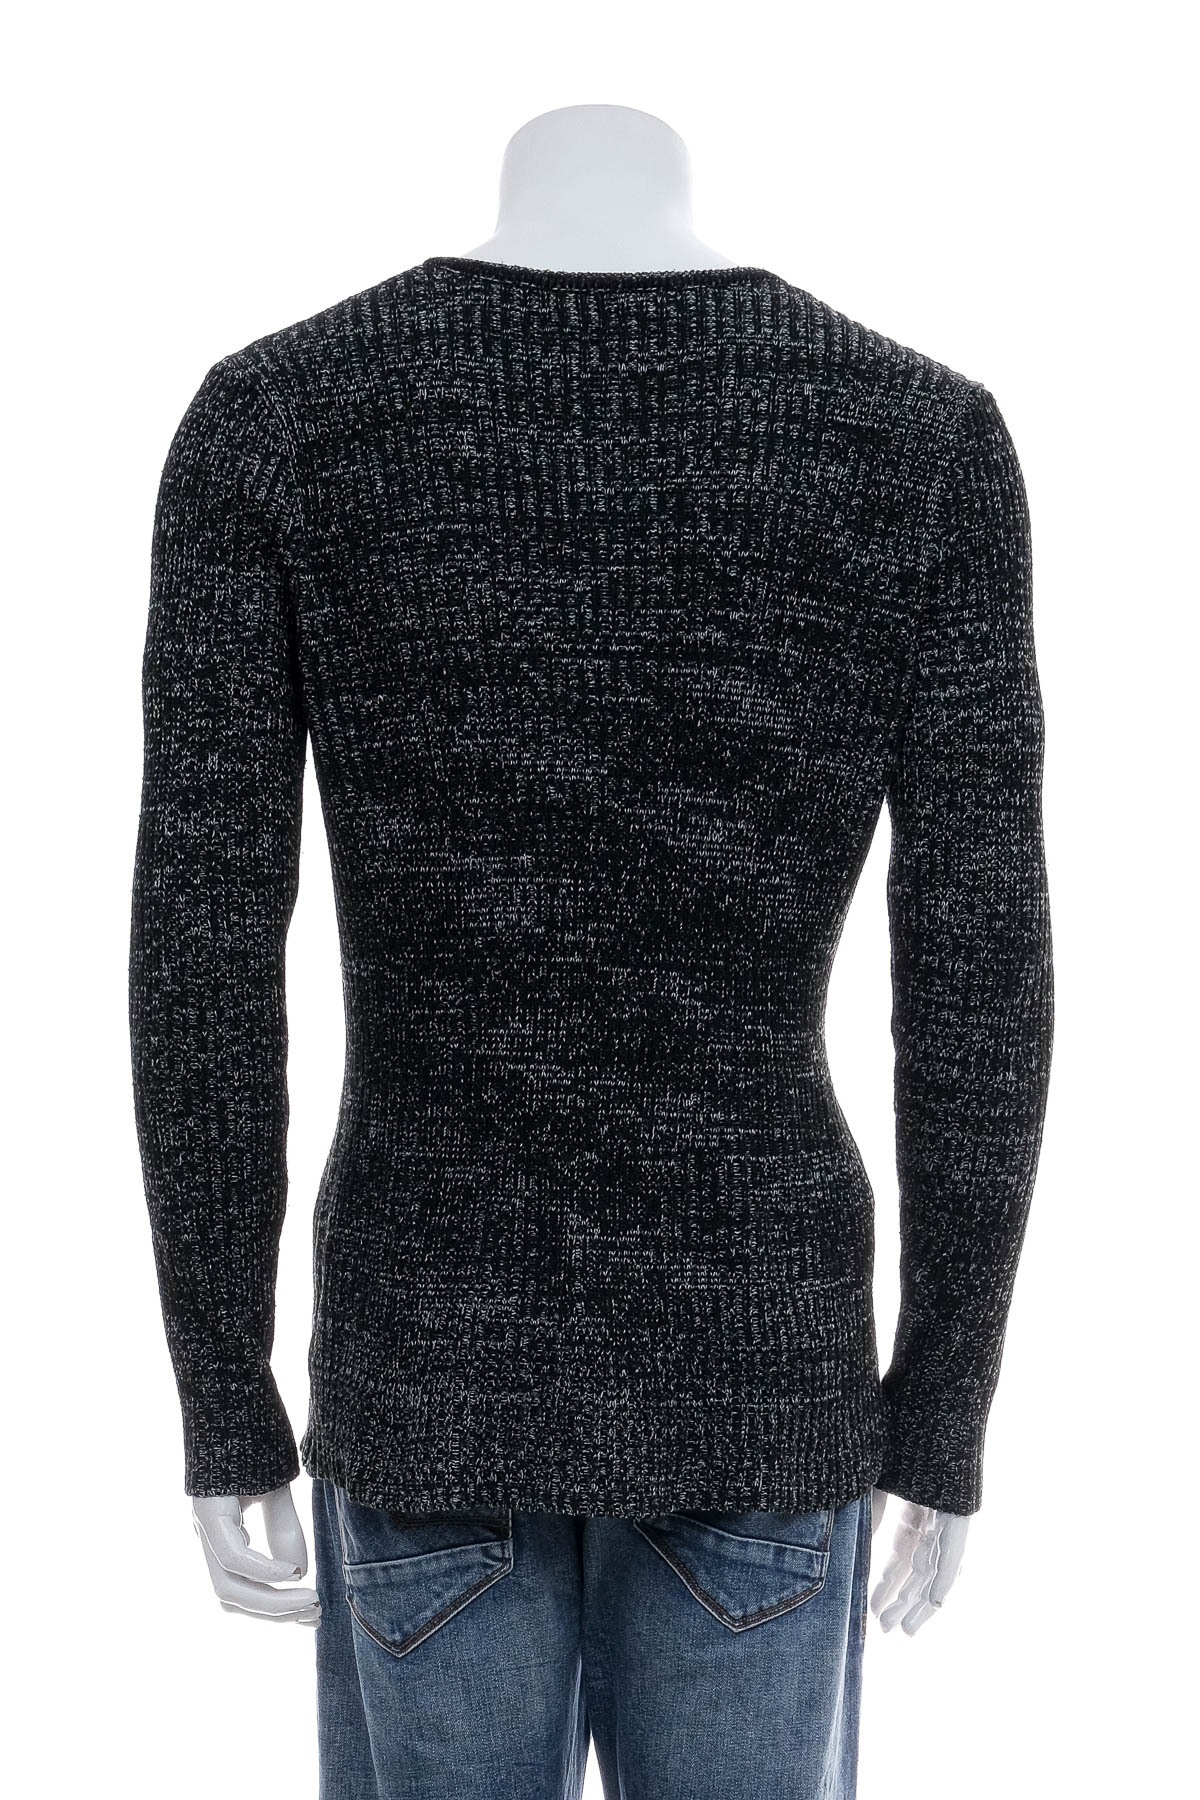 Men's sweater - REVERSE - 1